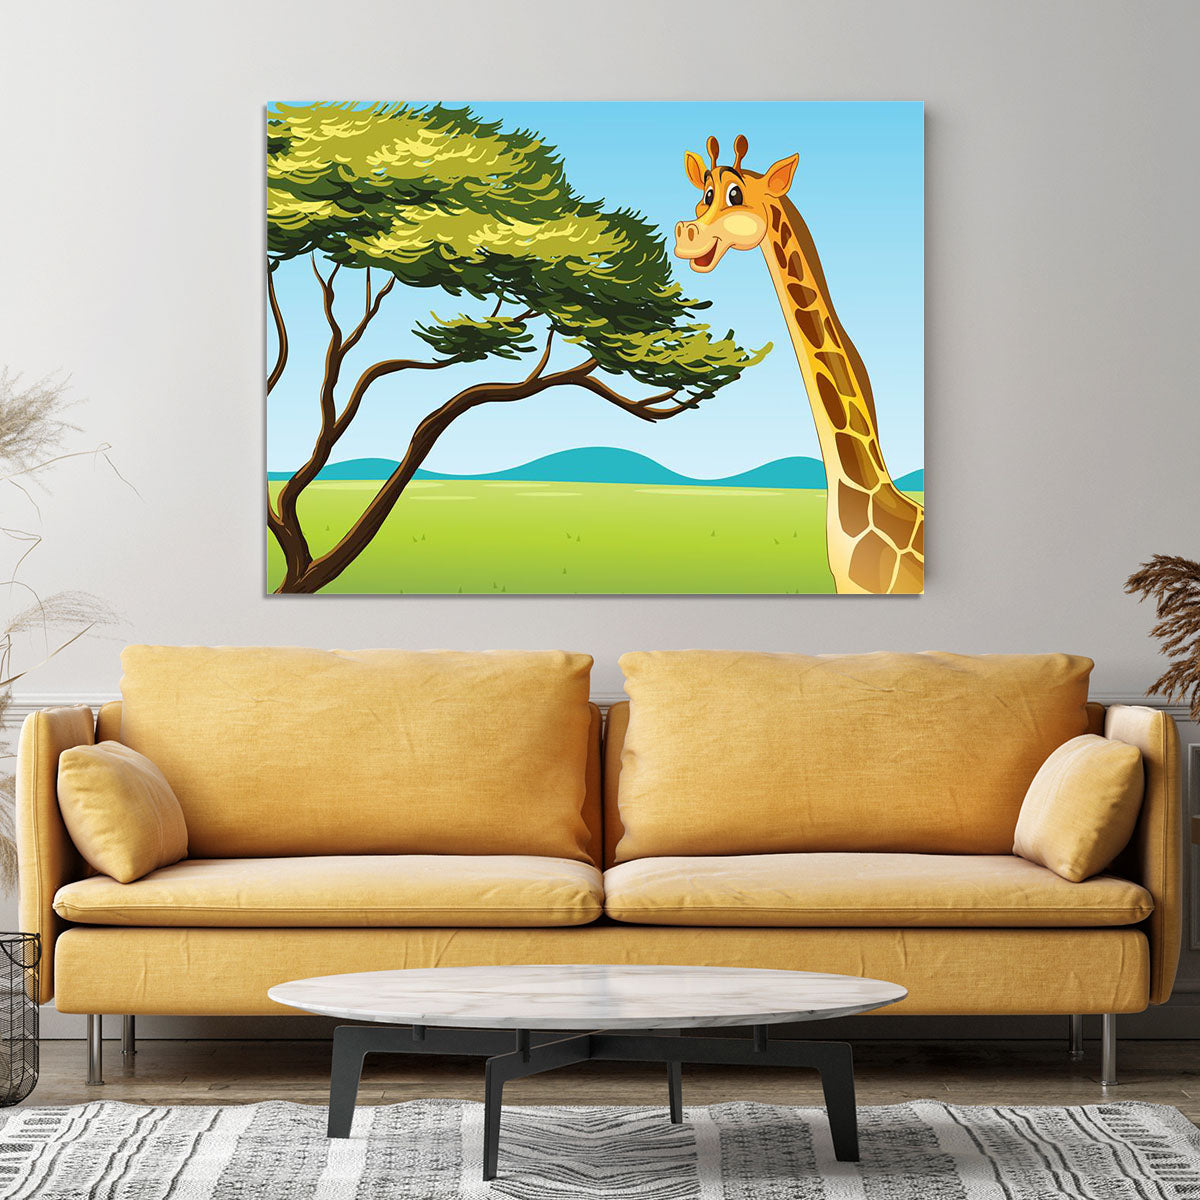 Illustration of a giraffe eating Canvas Print or Poster - Canvas Art Rocks - 4